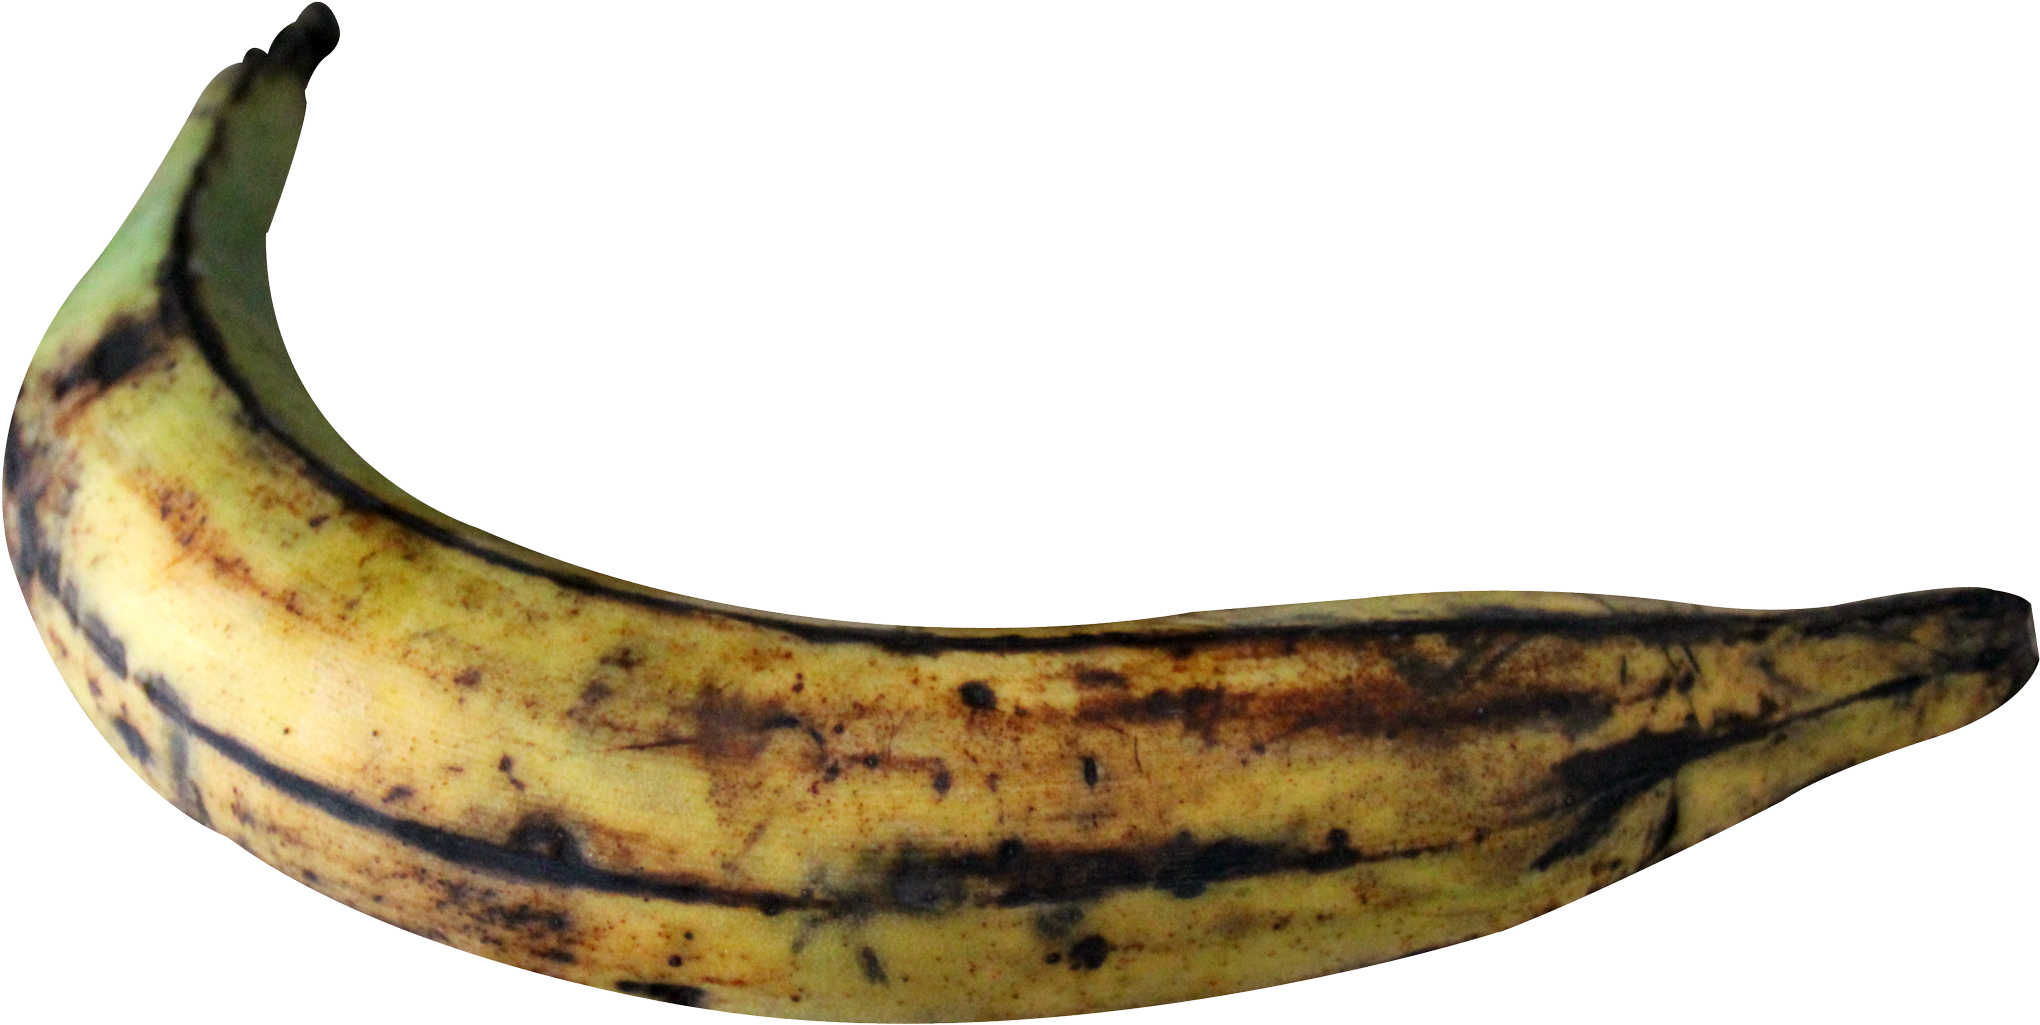 A Banana With Black Spots